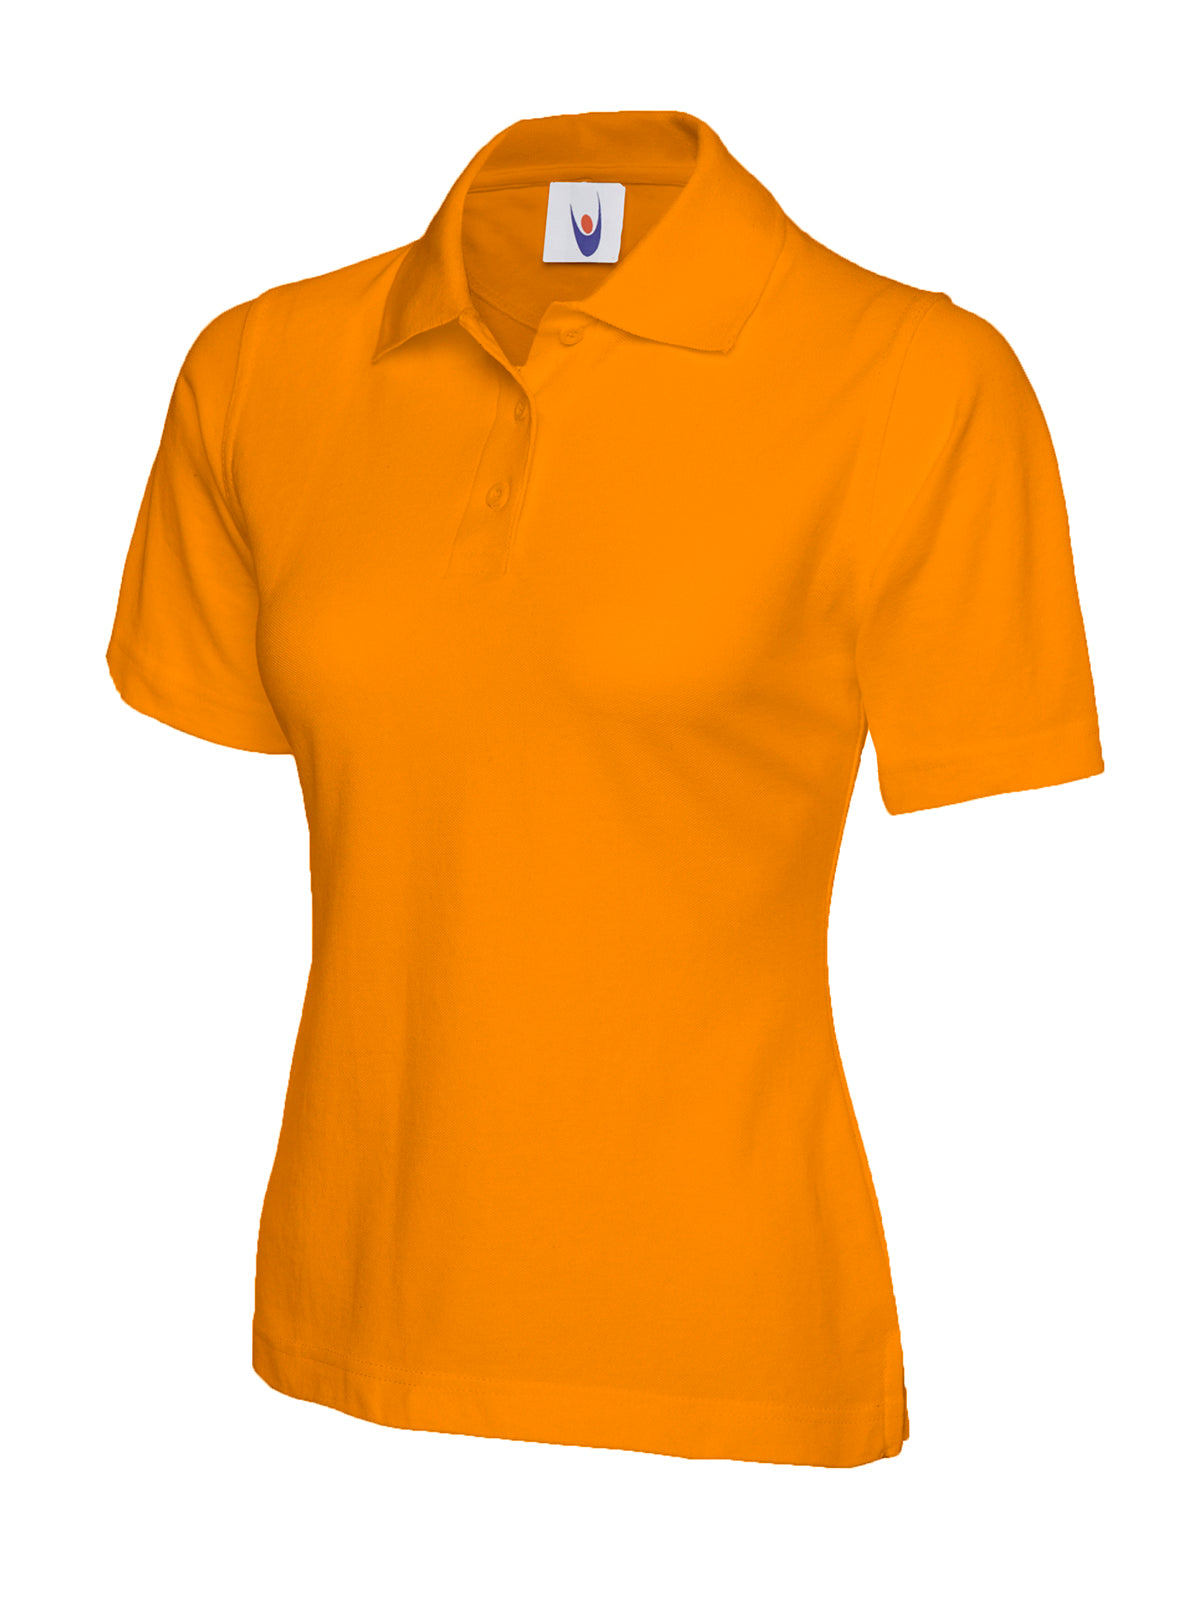 Uneek Ladies Classic Poloshirt UC106 - Orange